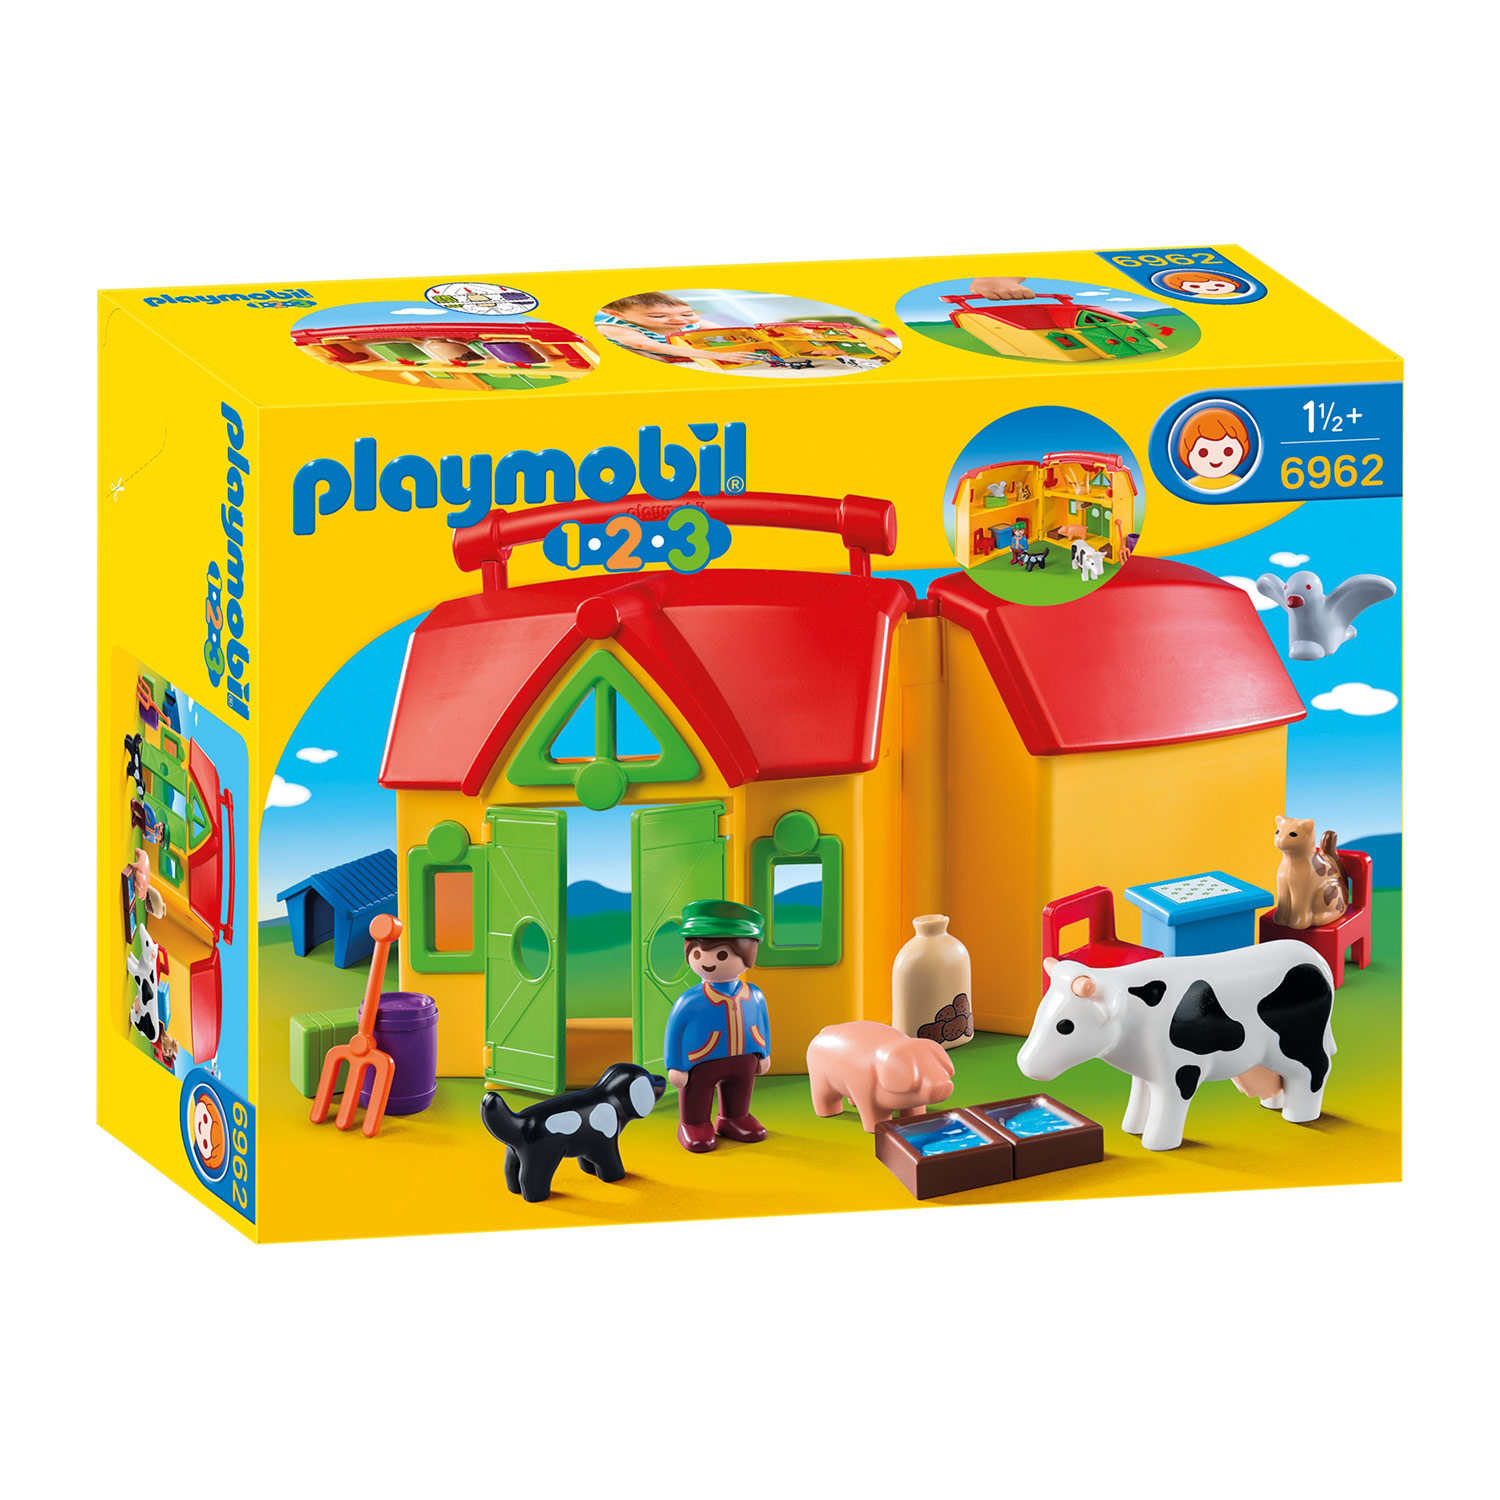 Playmobil 123 Animal Train Building Set 70405